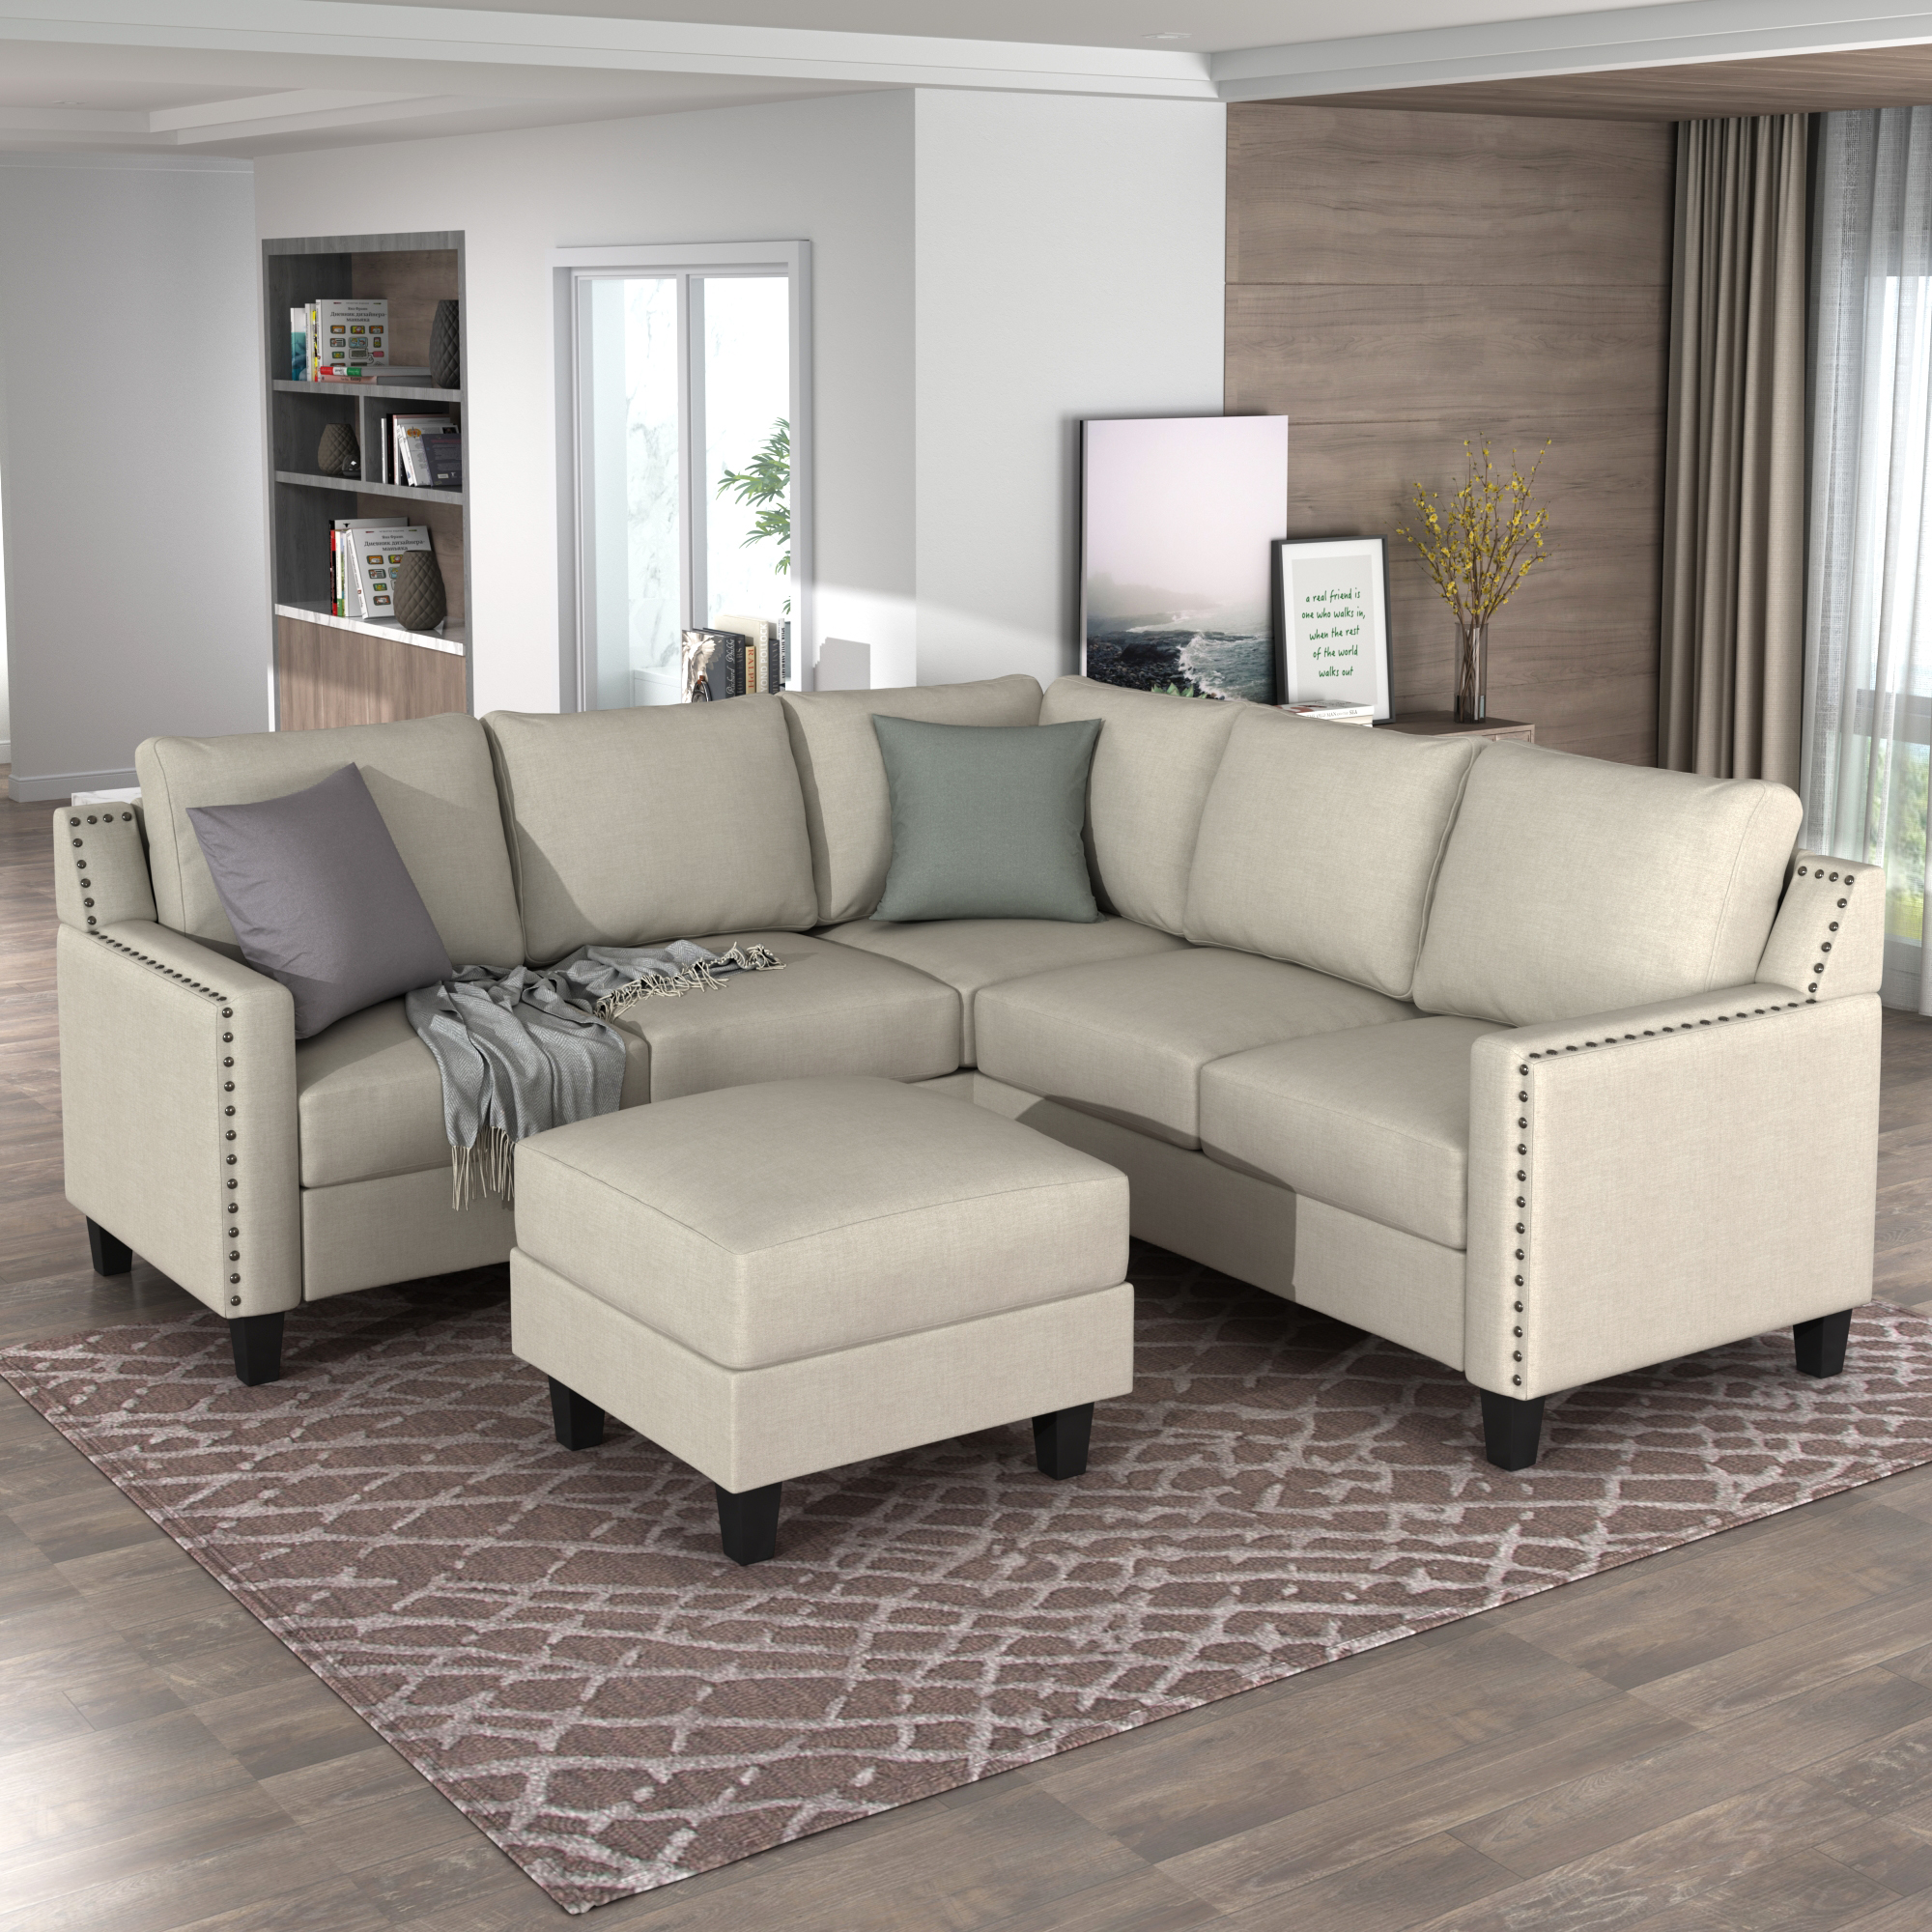 2 Piece Living Room Rivet Modern Upholstered Set with cushions New-Boyel Living